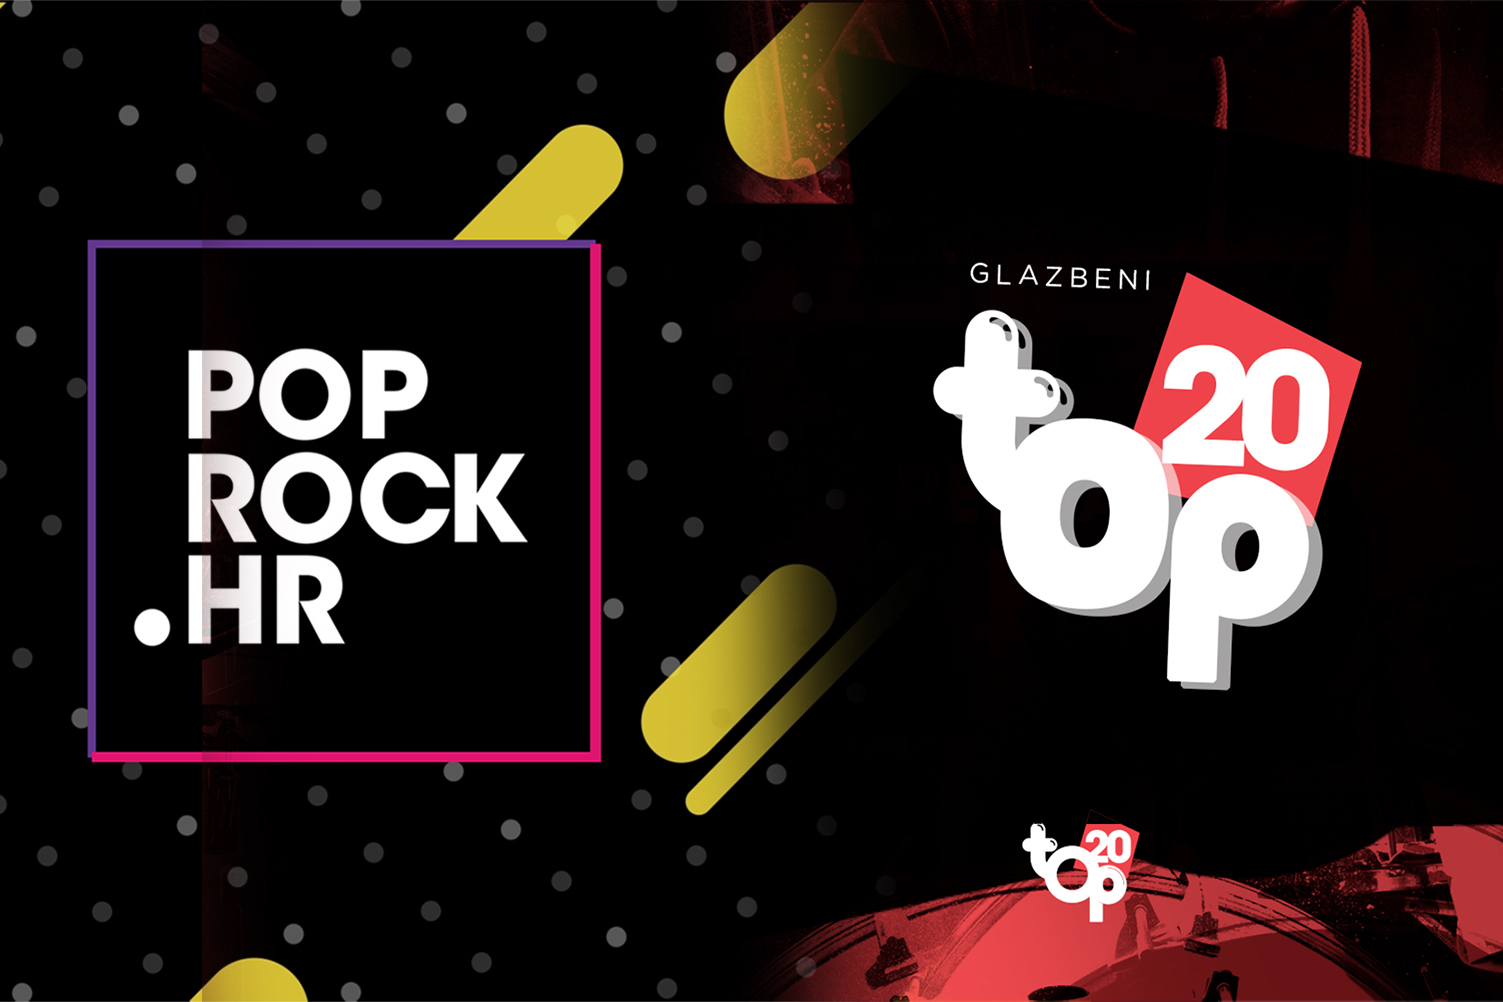 Poprock.hr & Glazbeni top 20 – ljetna pauza